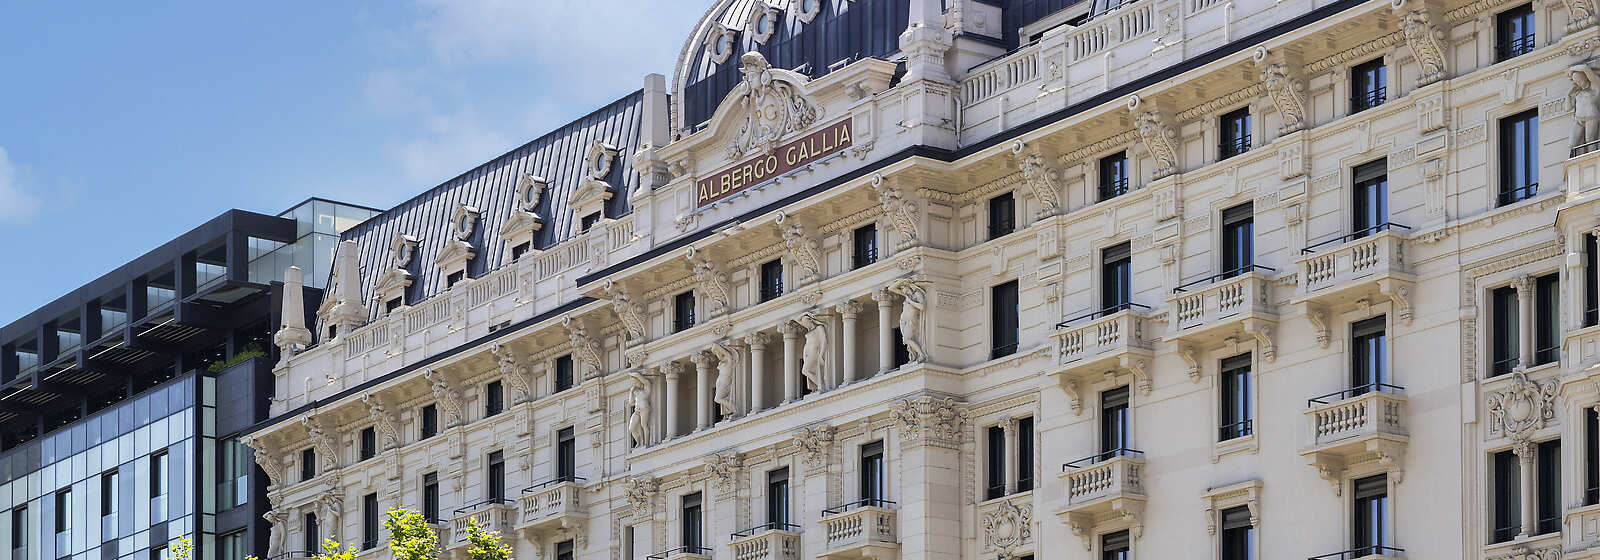 A stunning Belle Époque façade